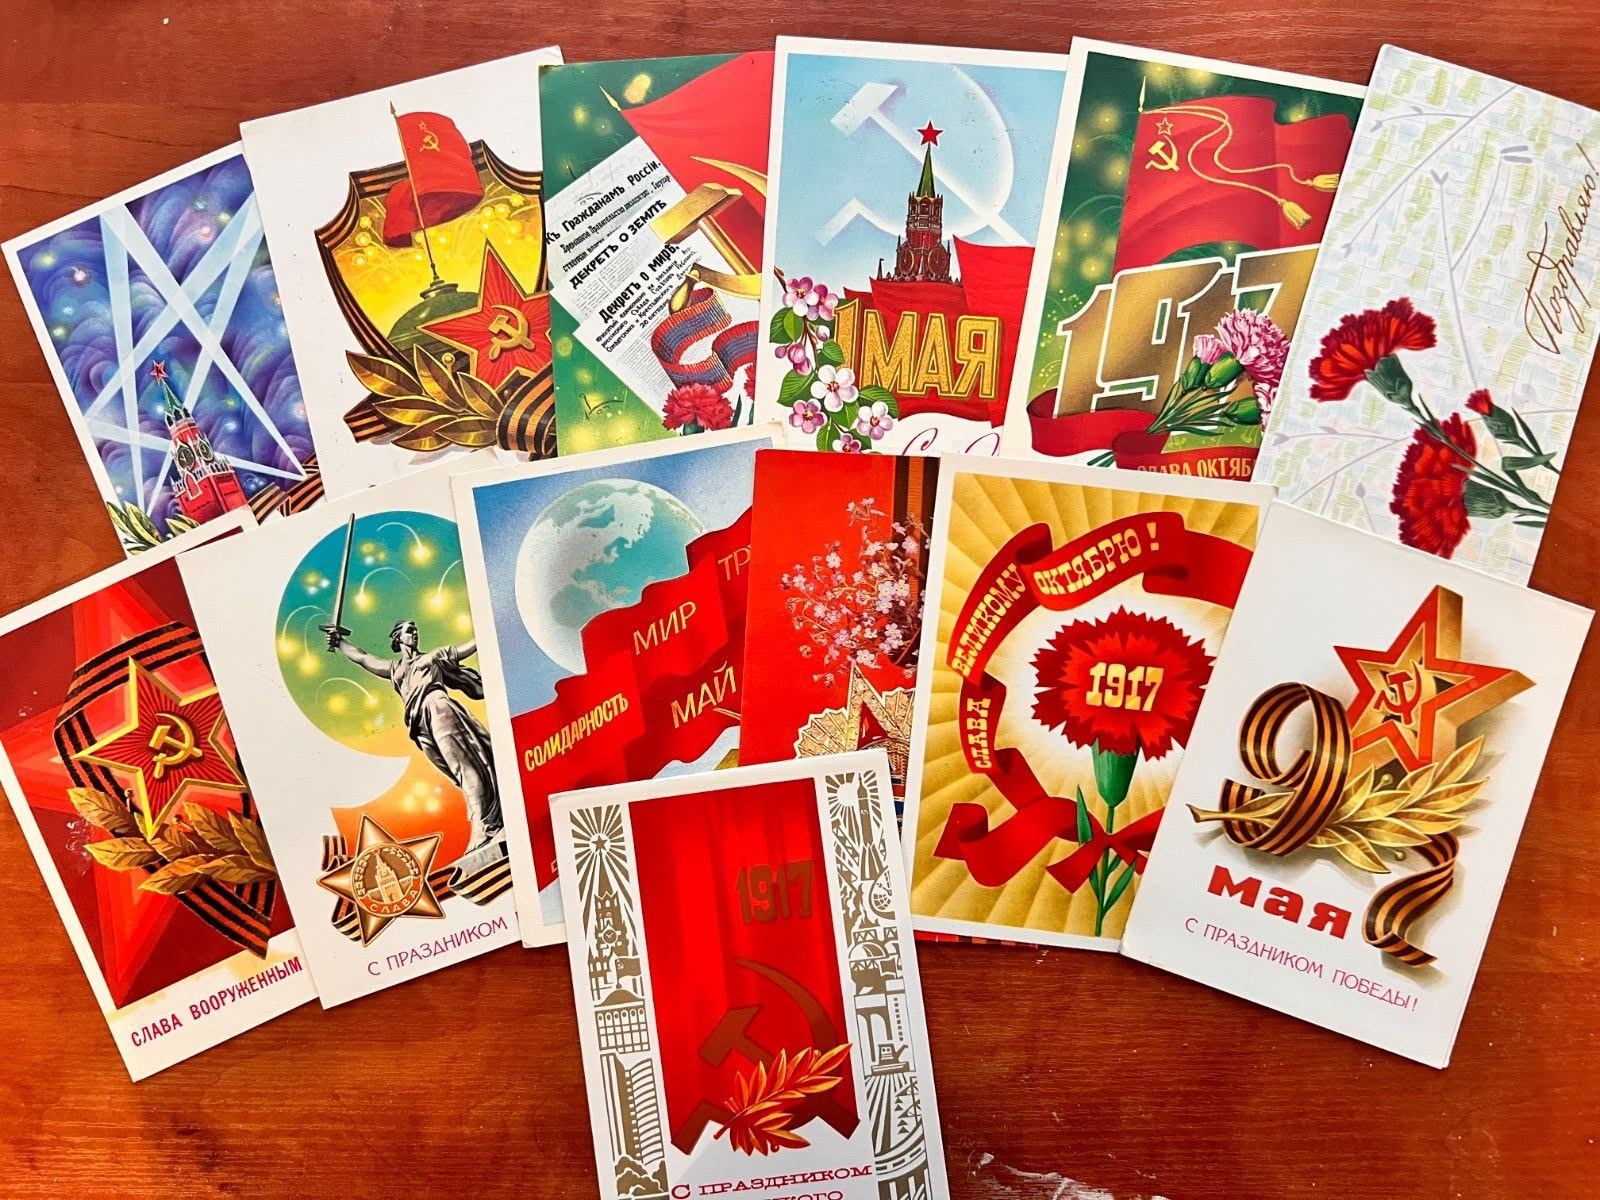 Lot of postcards Greeting Cards Soviet Propaganda 1 May 9th May Soviet postcards